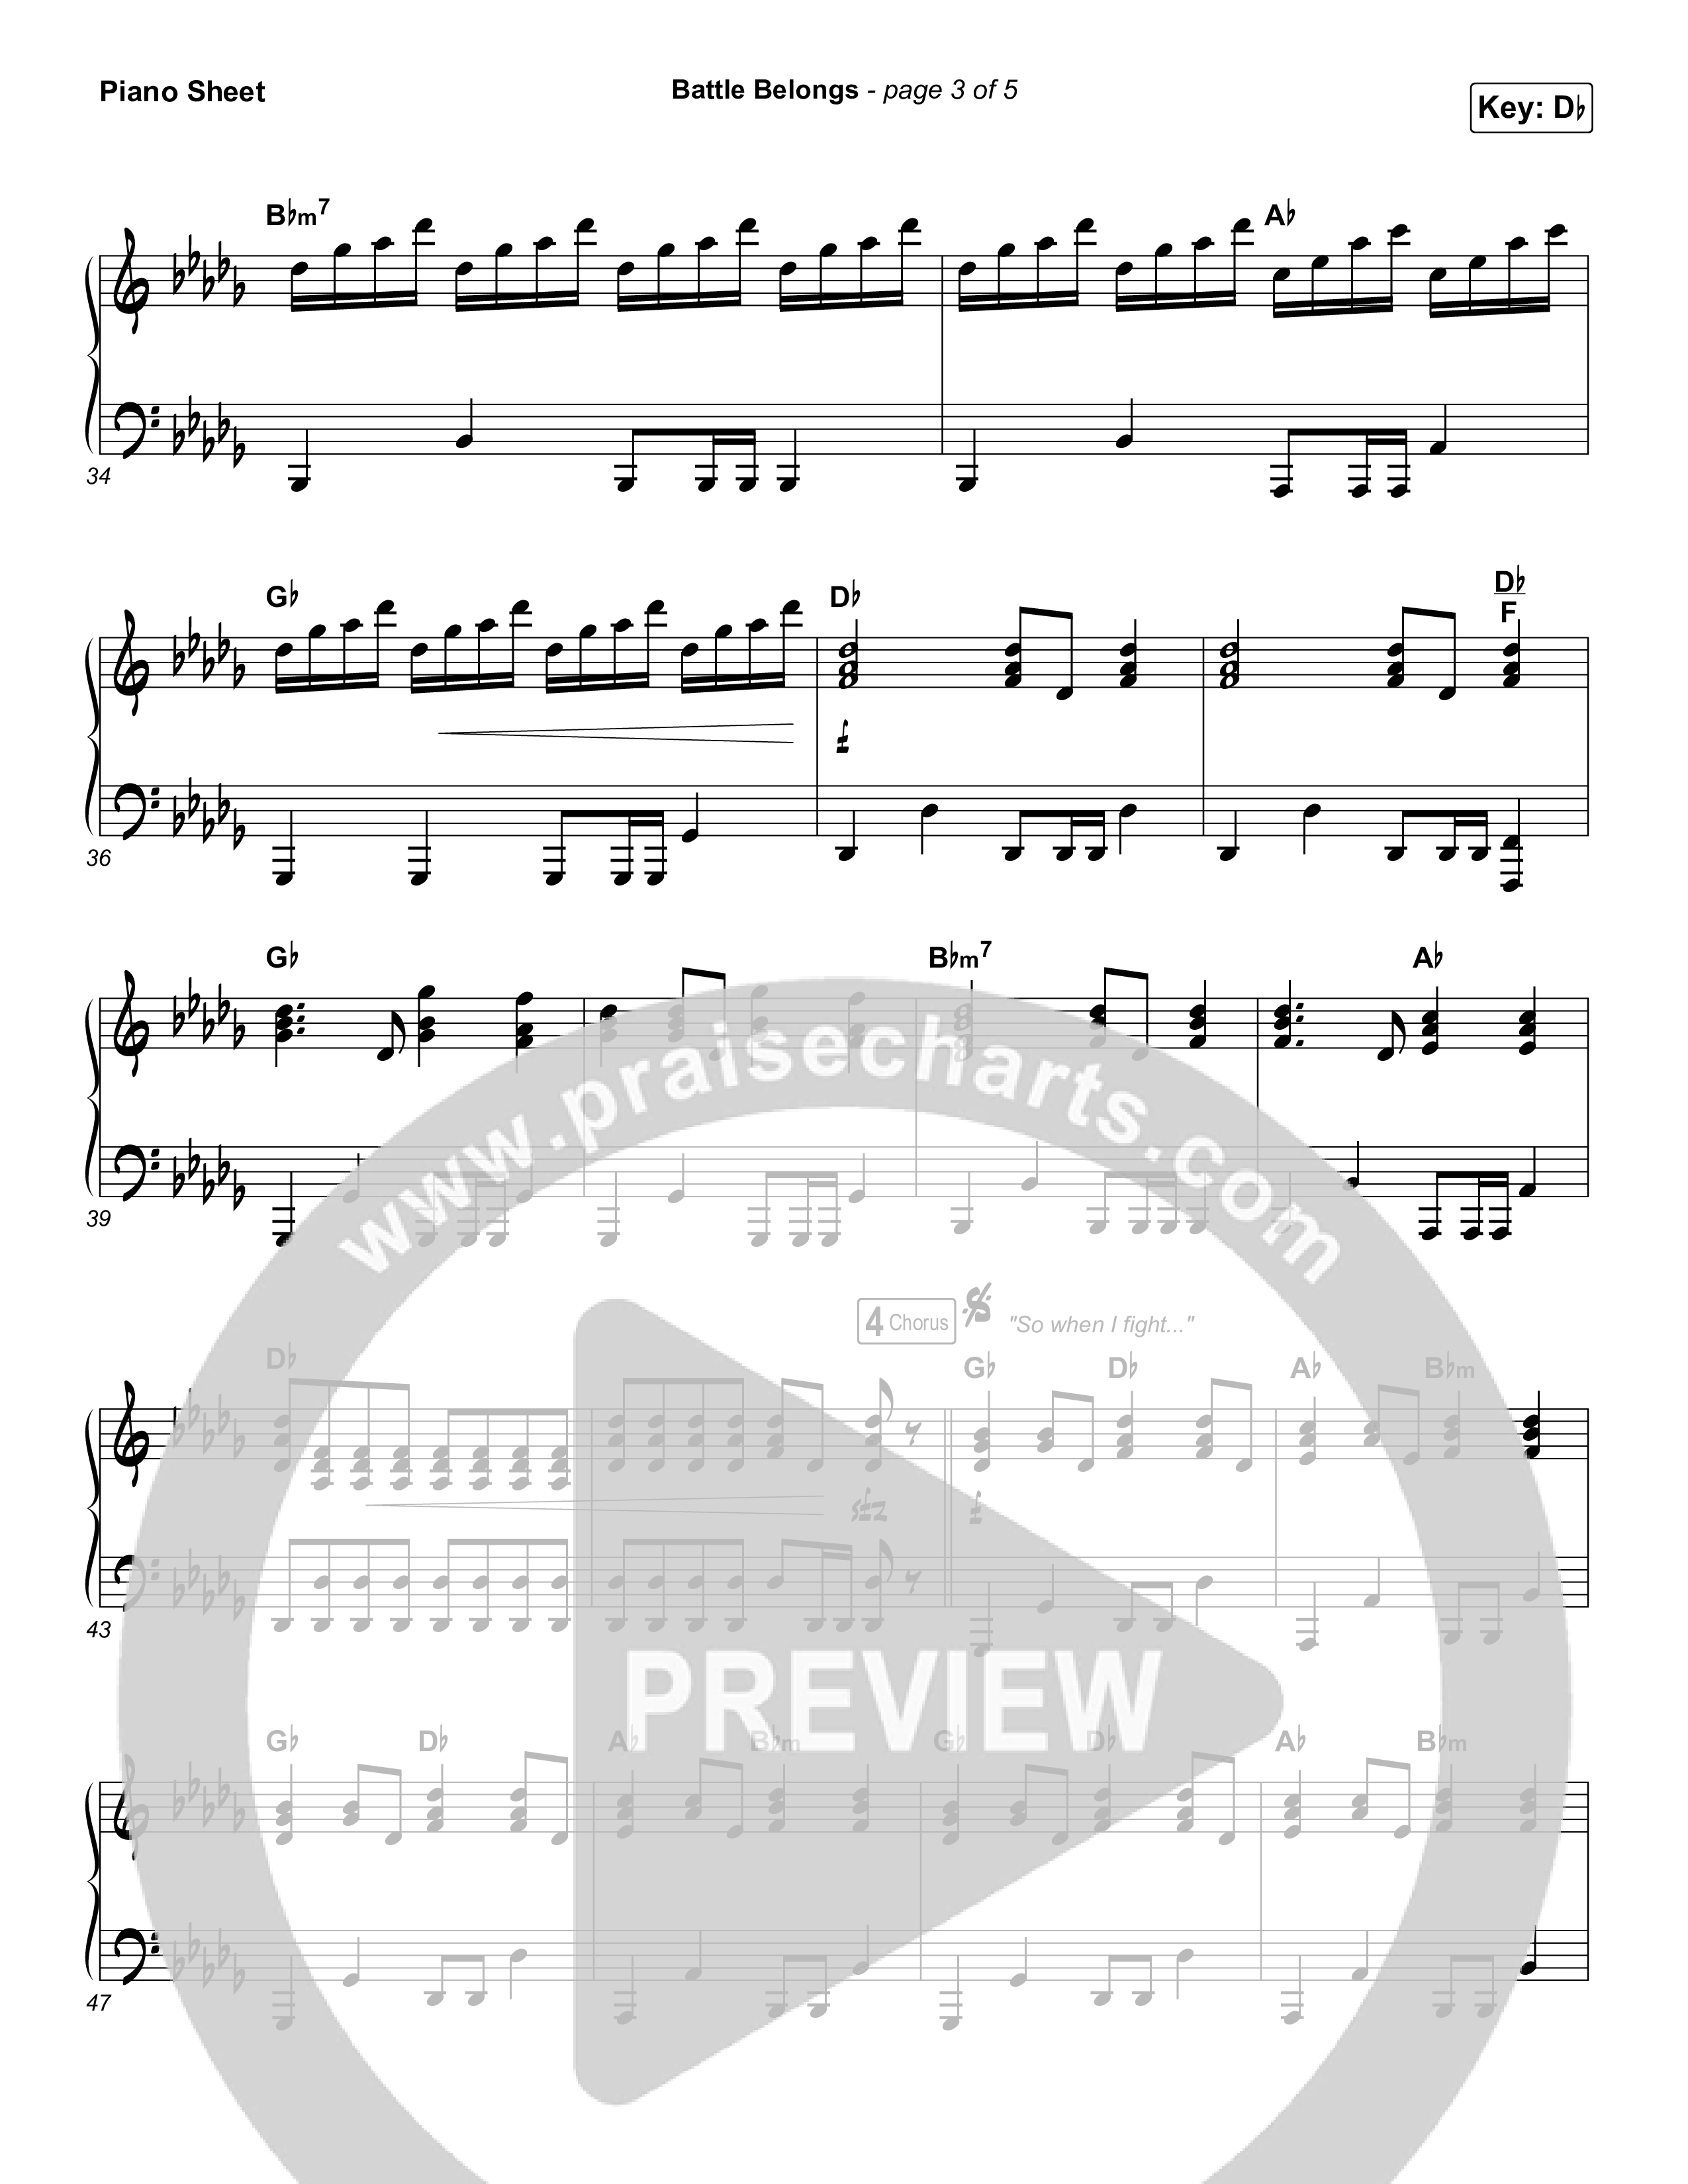 Battle Belongs (Choral Anthem SATB) Piano Sheet (Phil Wickham / Arr. Luke Gambill)